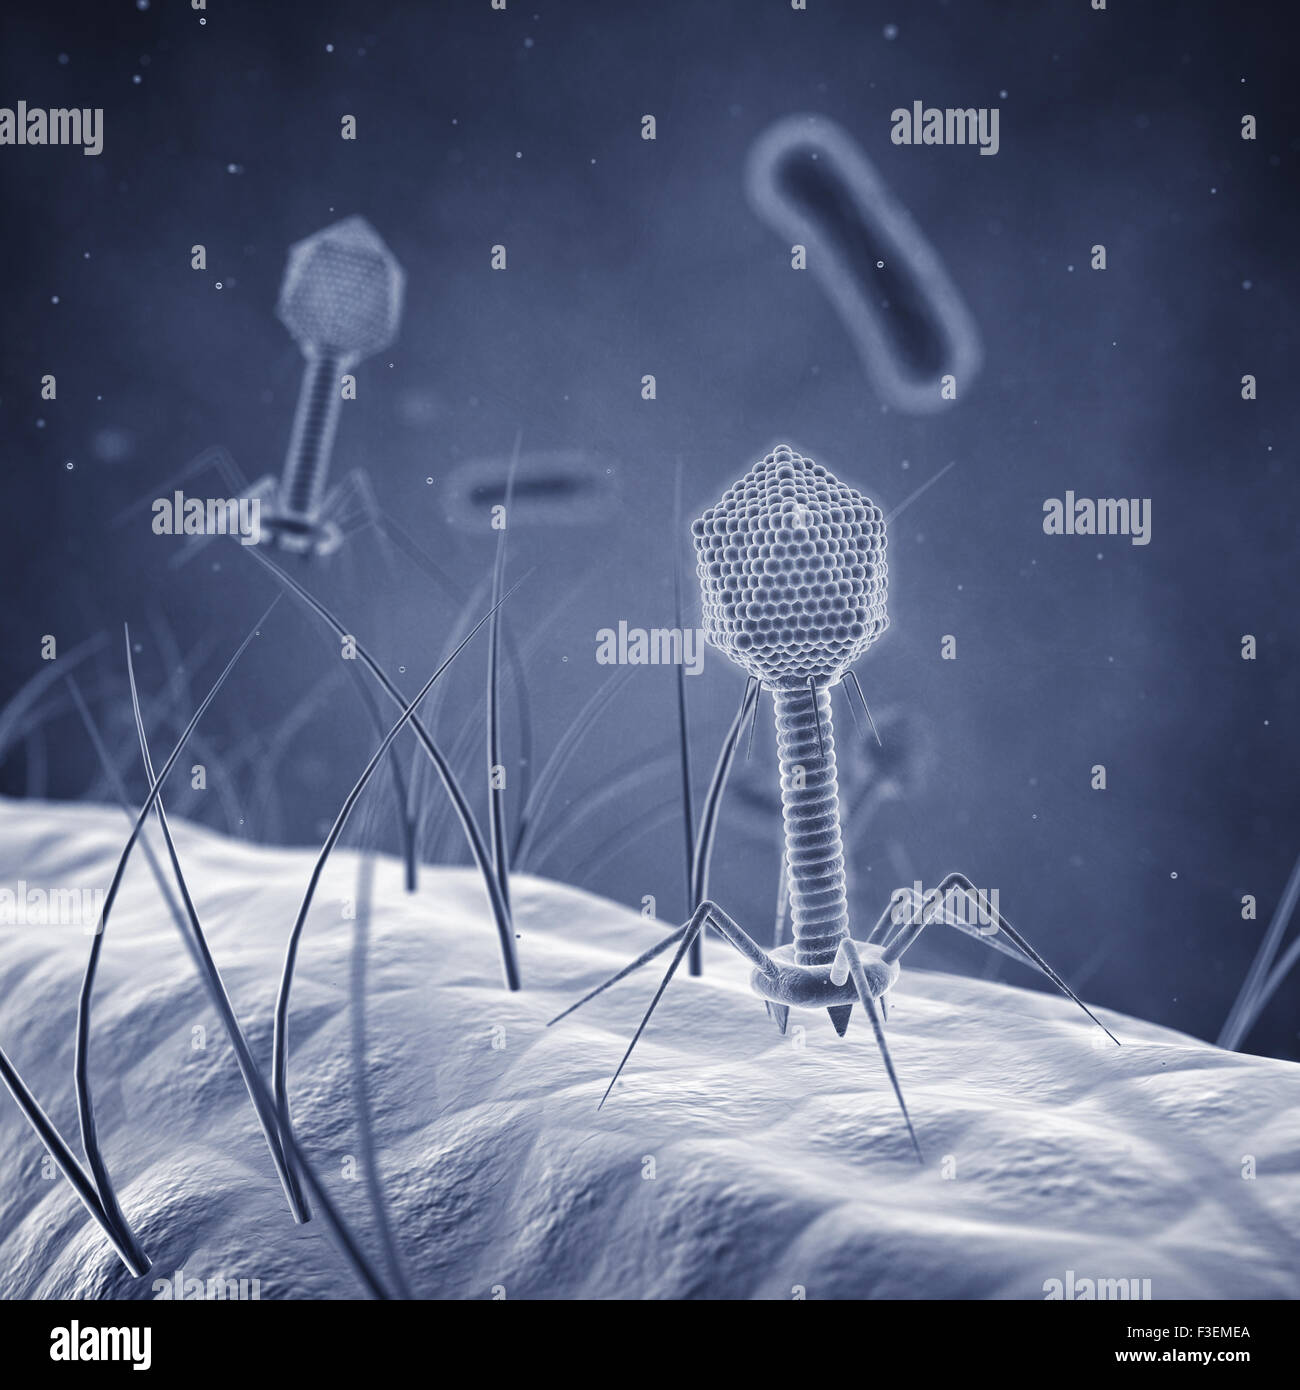 Bakteriophagen-Viren infizieren Bakterienzellen, bakterielle Viren Stockfoto